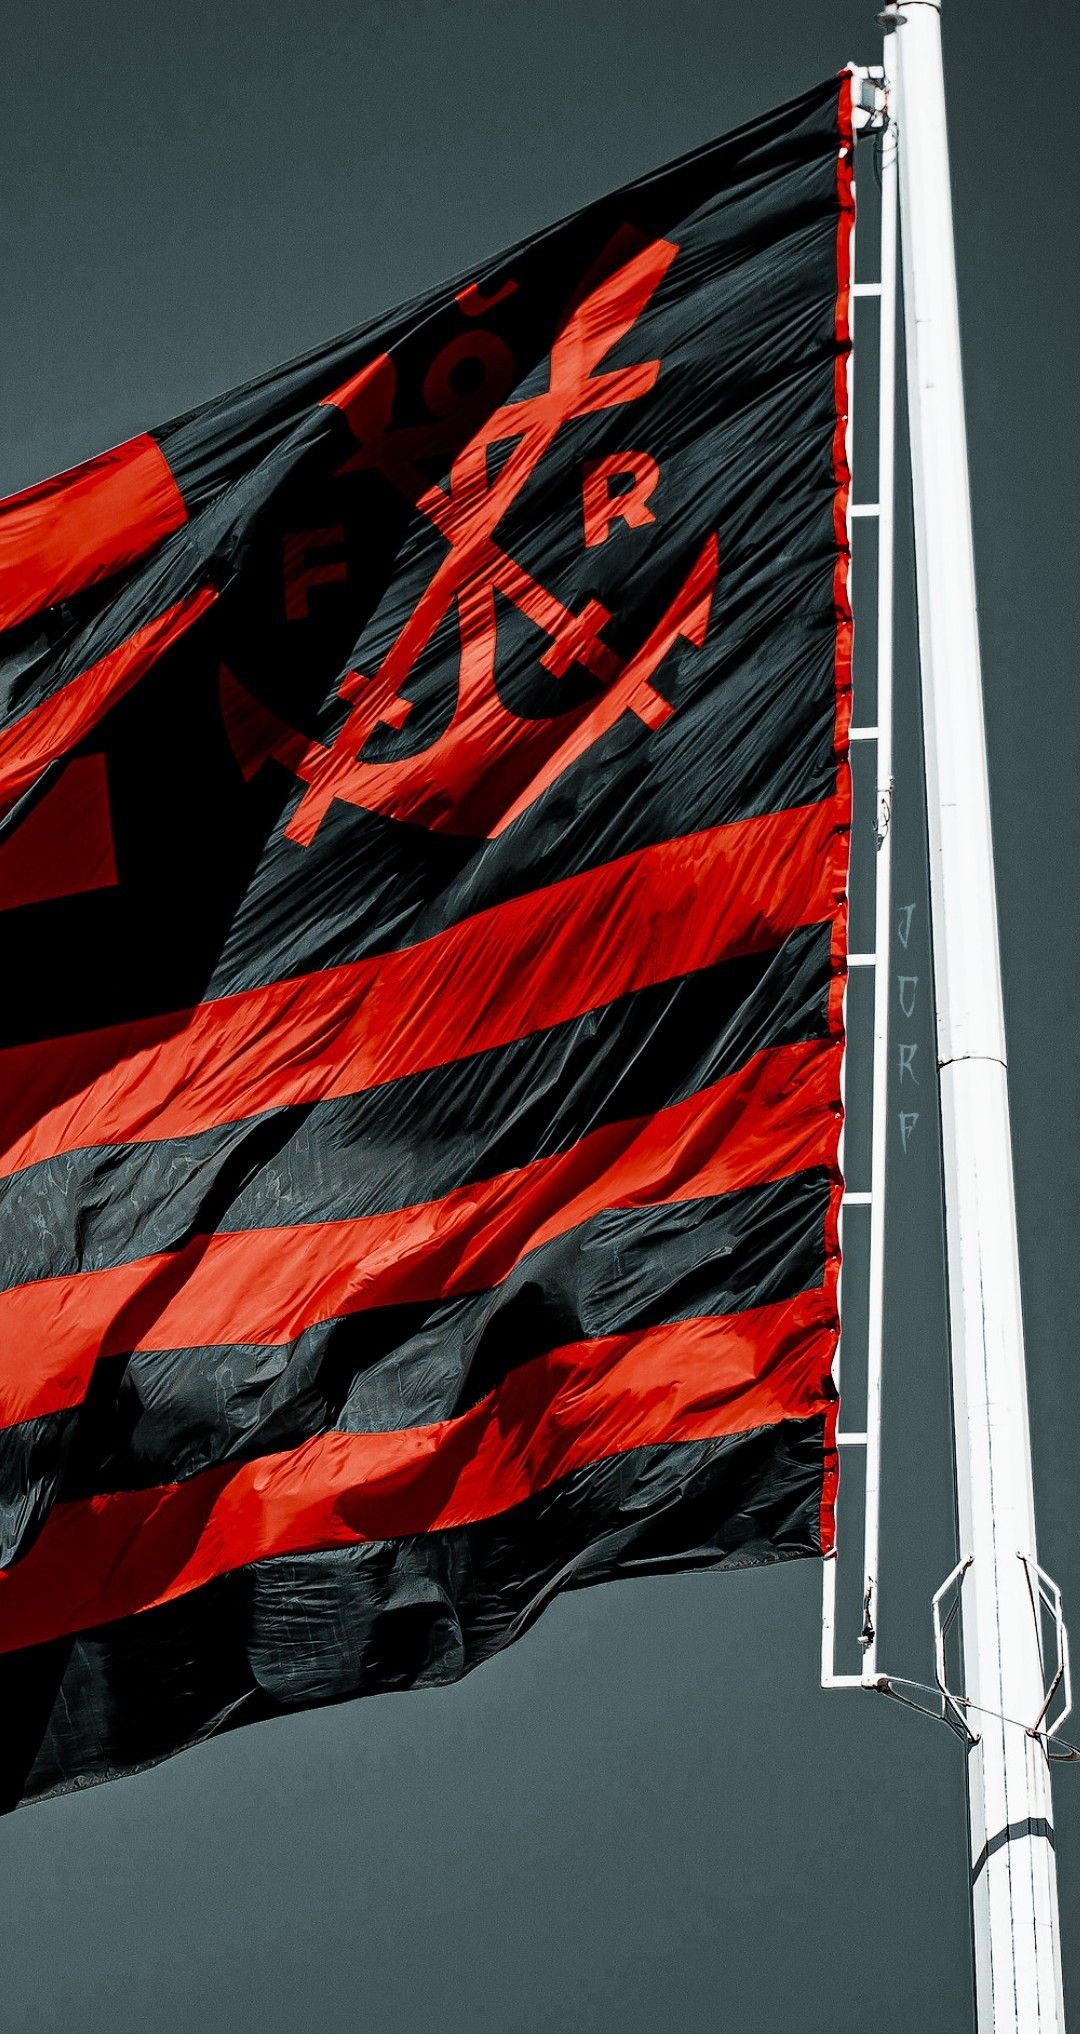 Papéis de parede do Flamengo